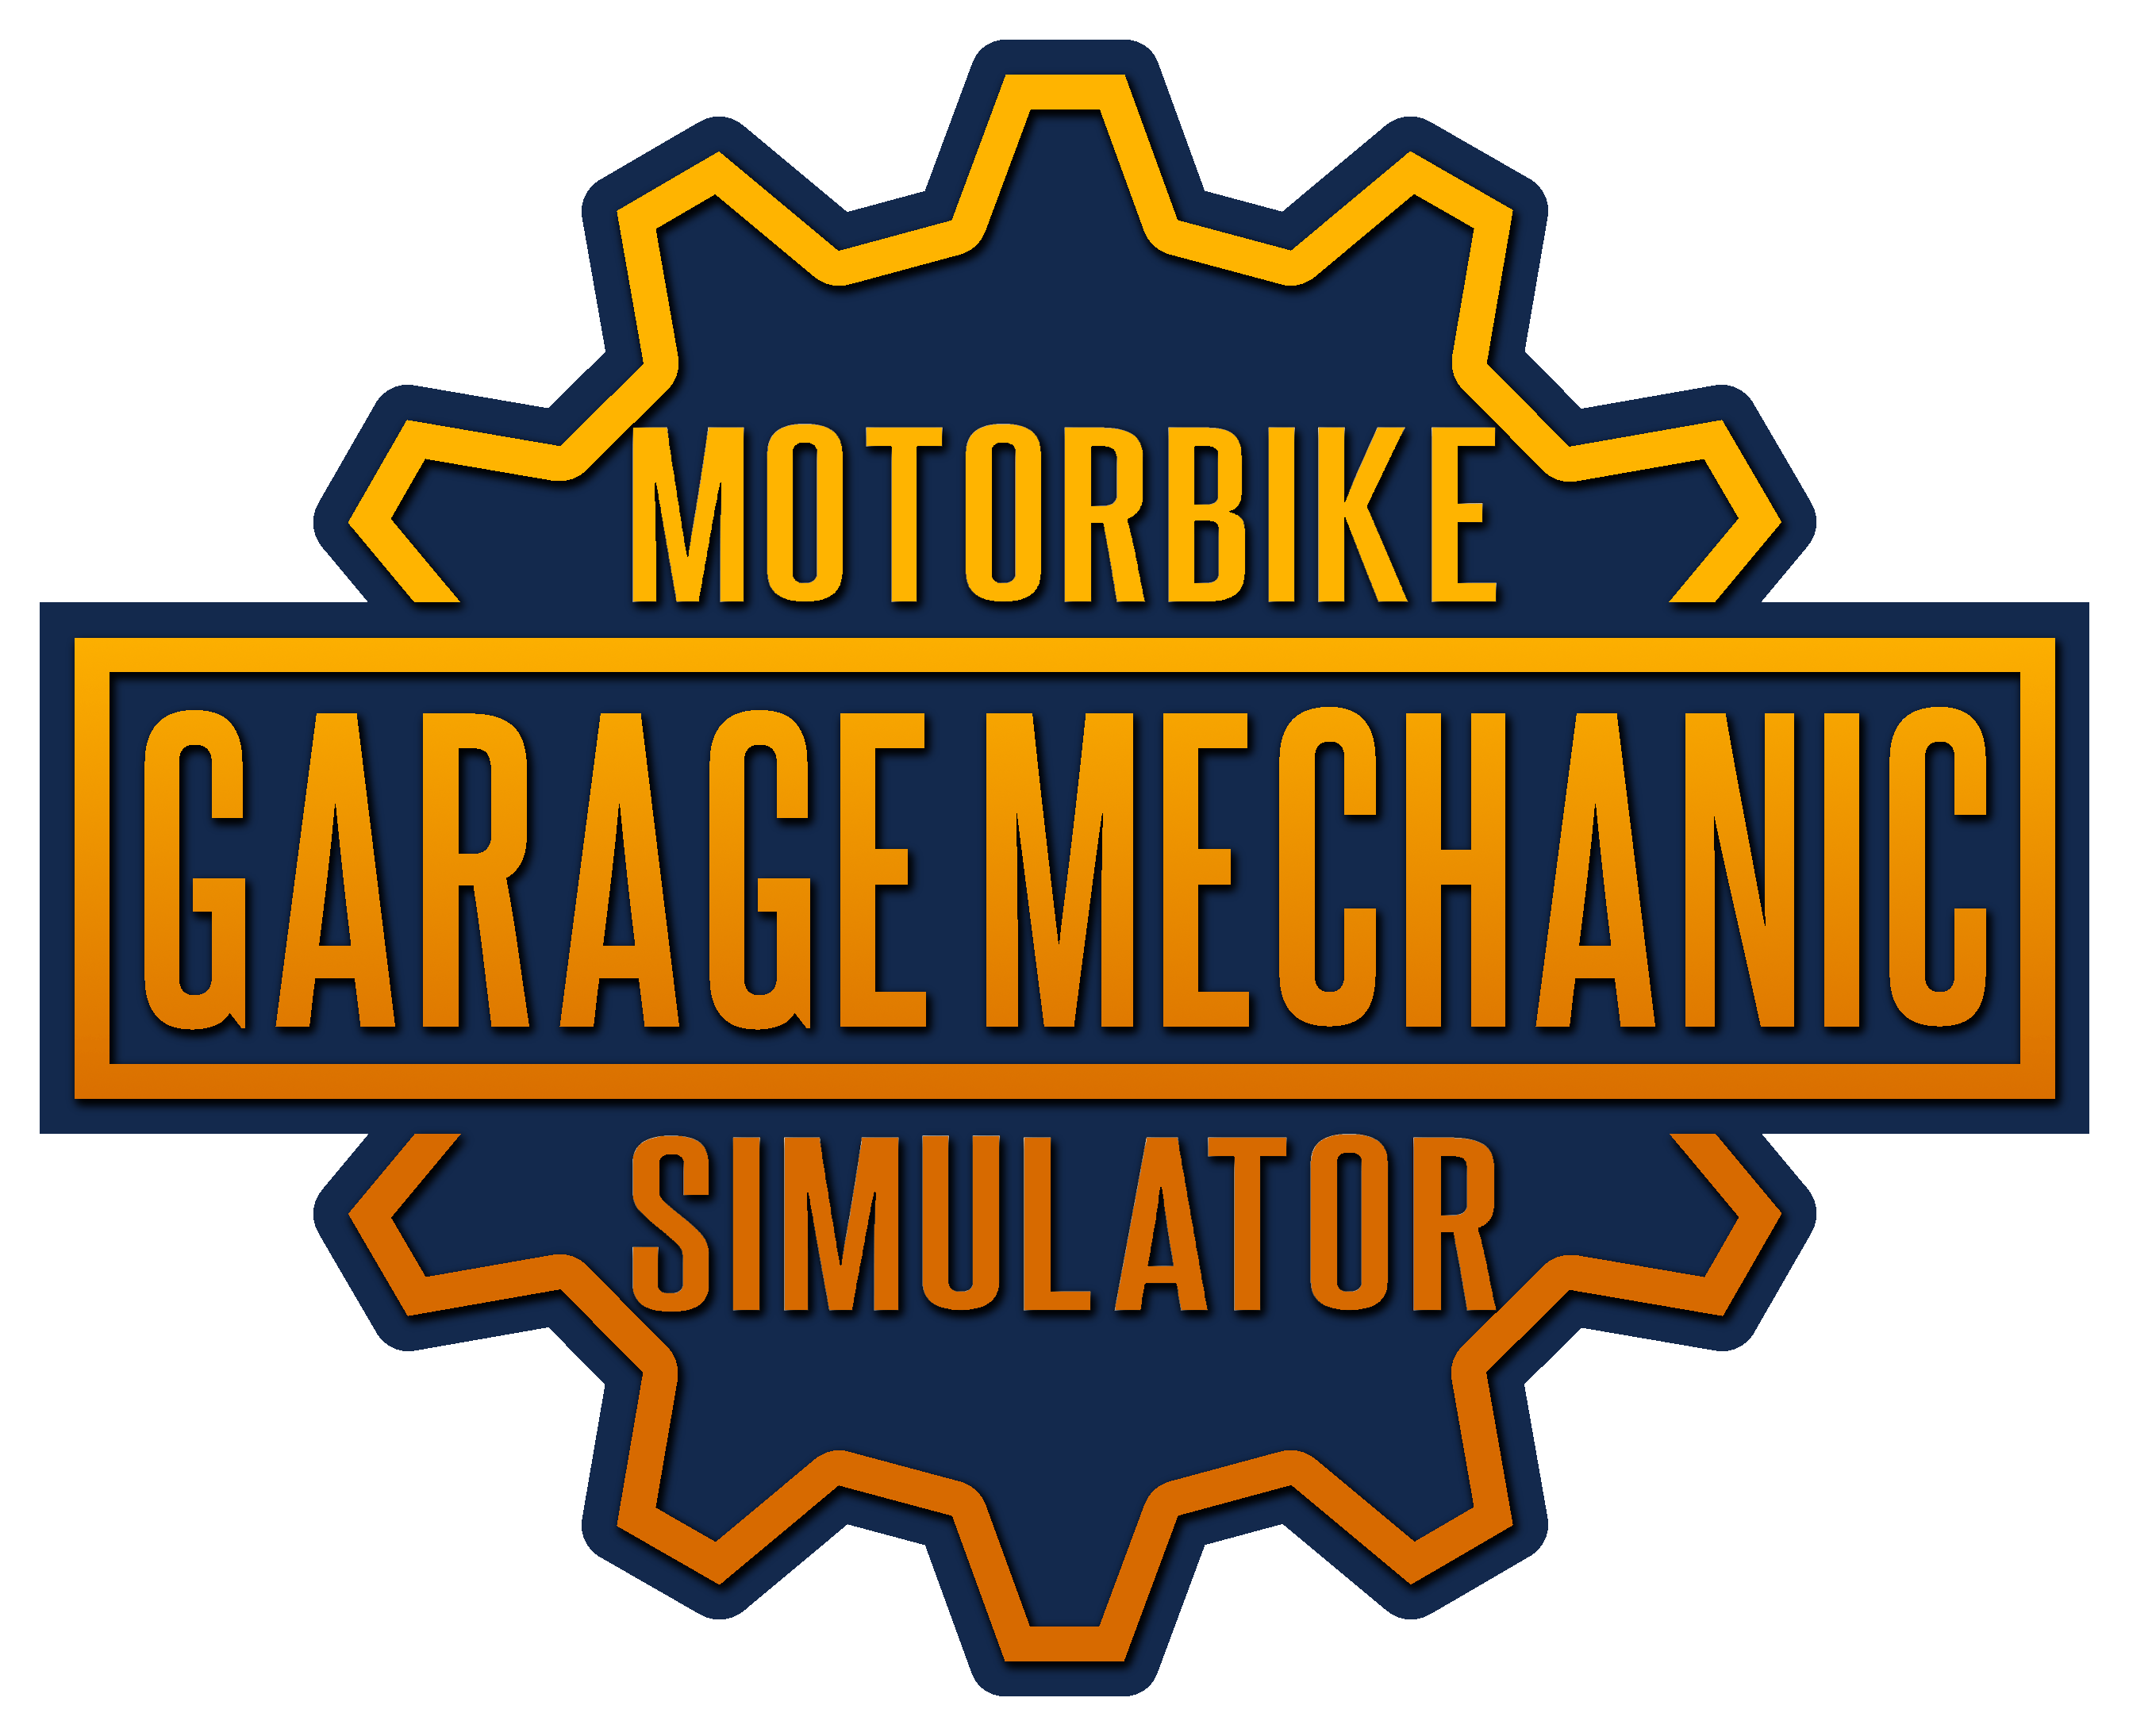 Motorcycle Mechanic Logo - Motorbike Garage Mechanic Simulator - You may kiss your ride